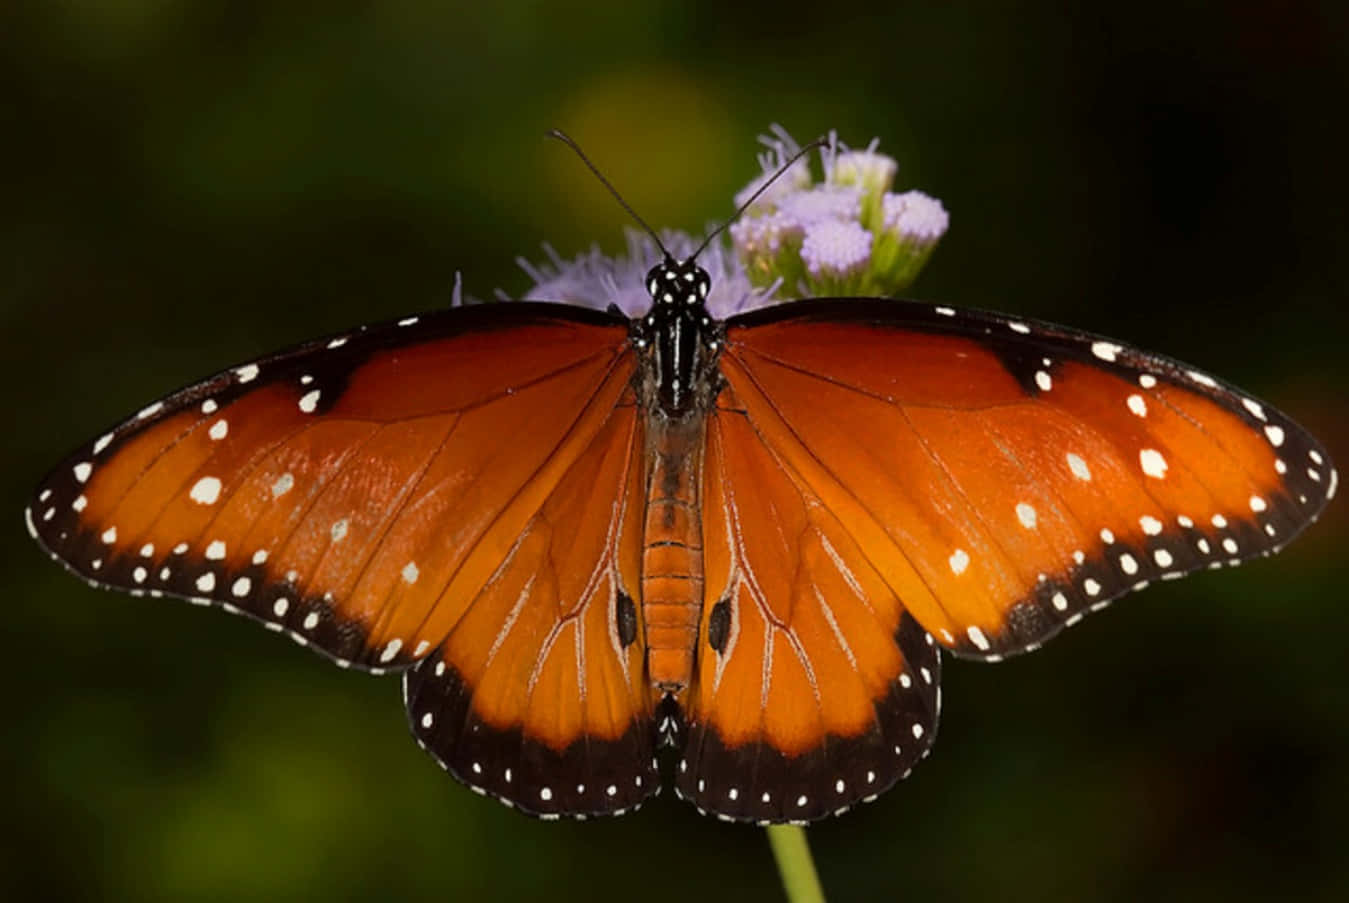 “A Regional Beauty - A Beautiful Butterfly Flutters Through The Air”